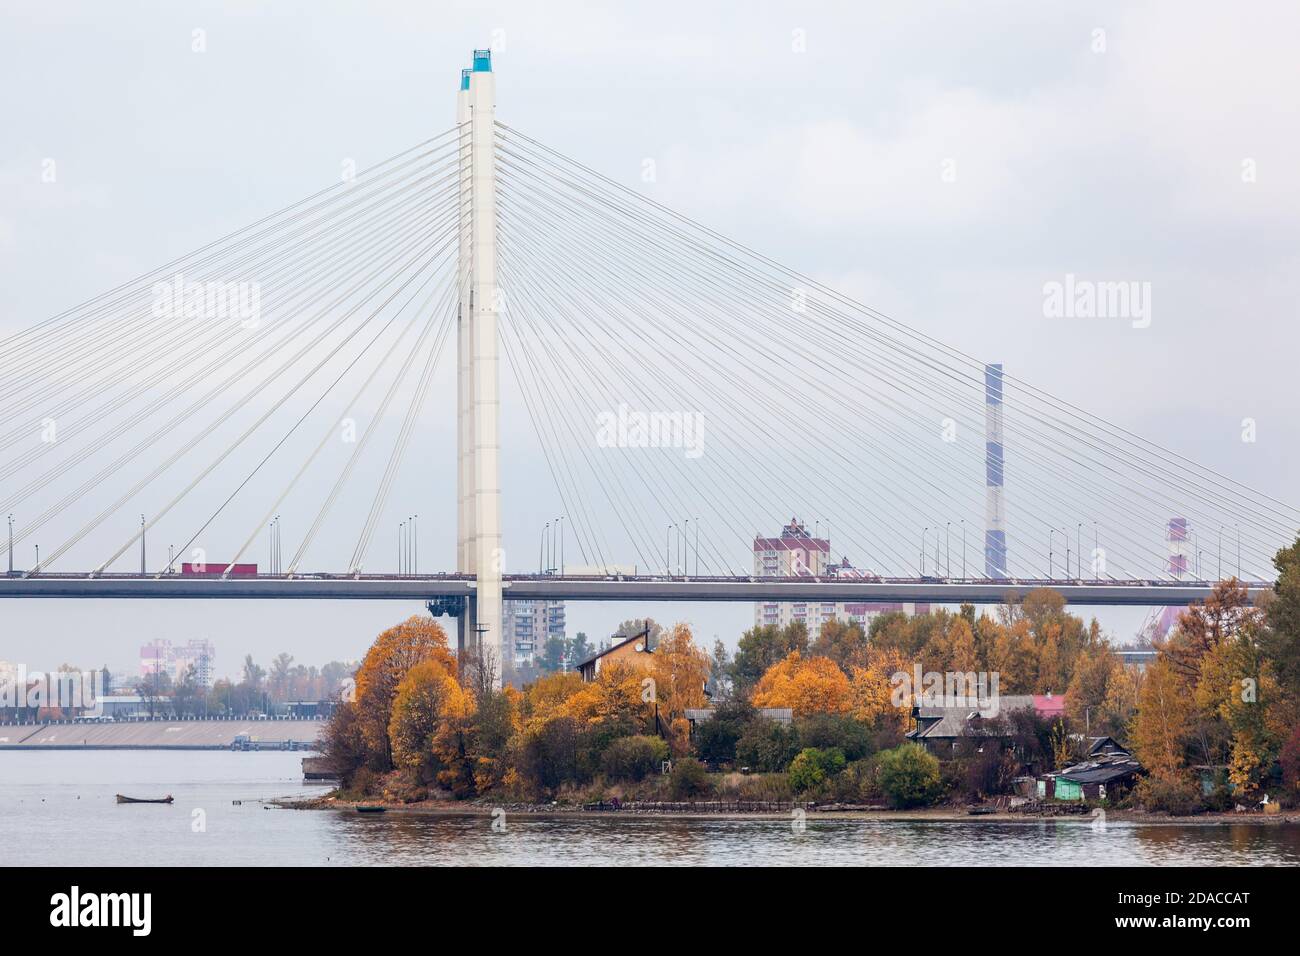 The Bolshoy Obukhovsky Bridge across the Neva River in Saint Petersburg, Russia at autumn season Stock Photo